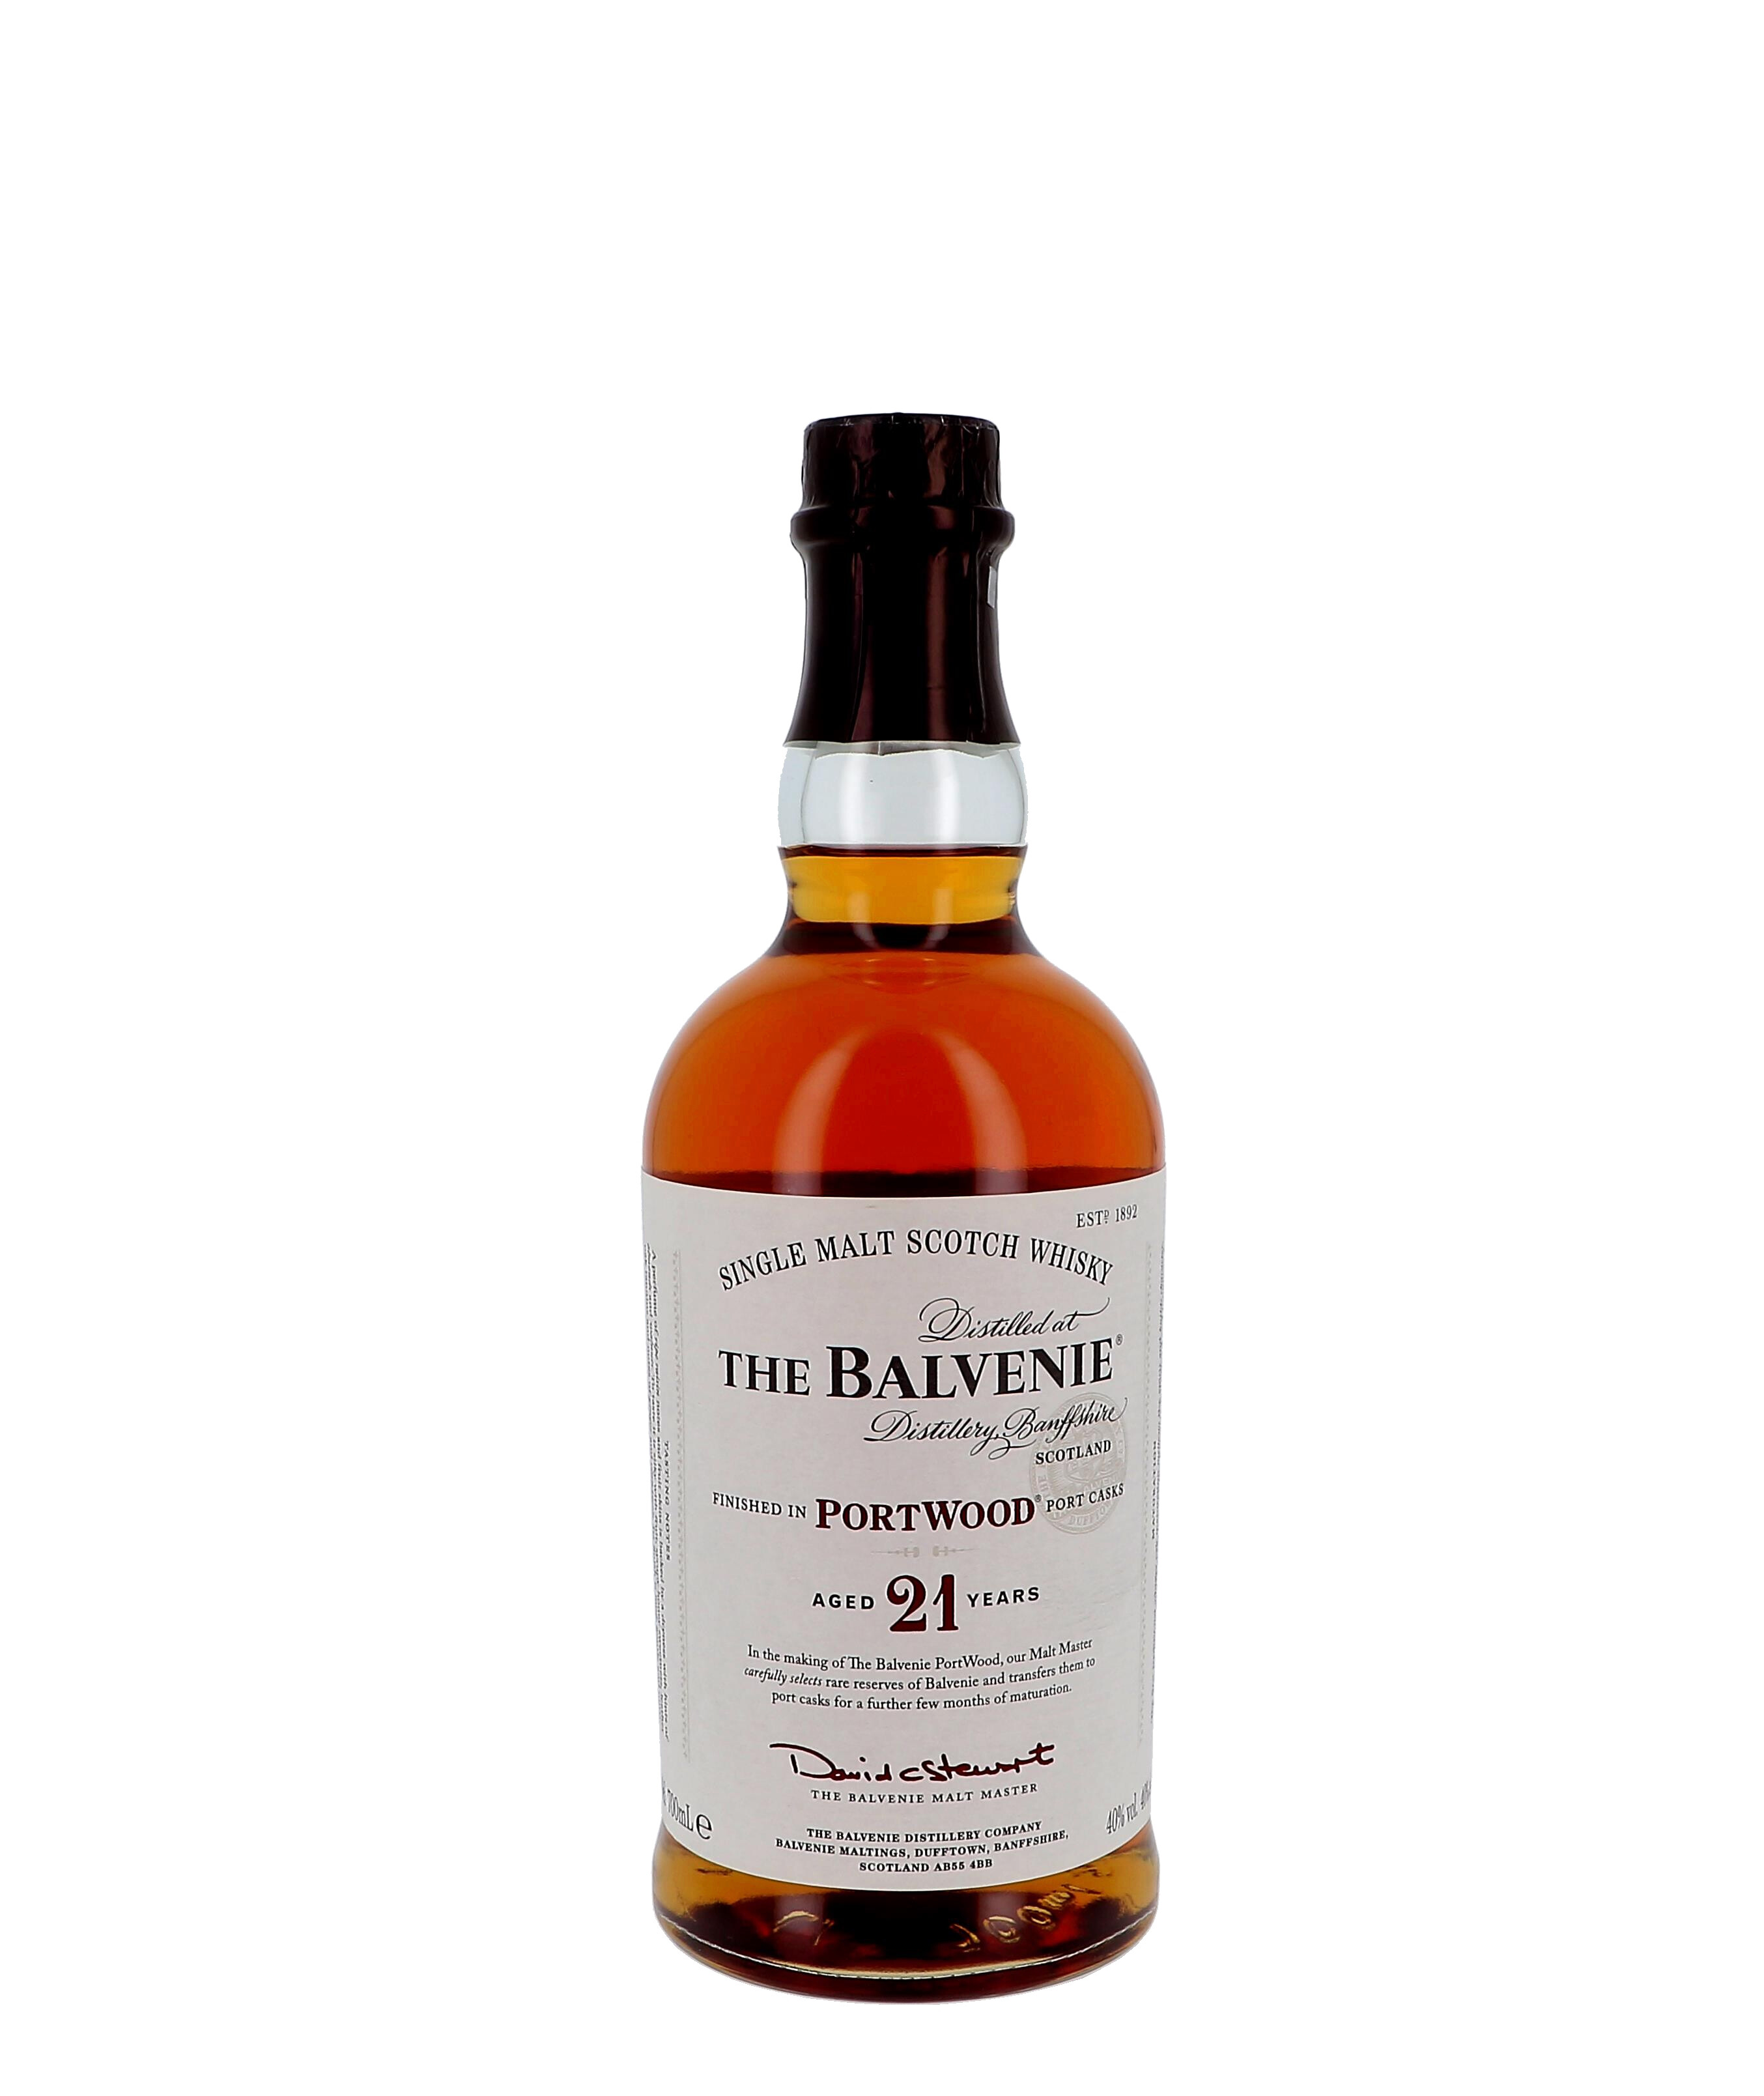 The Balvenie 21 year old Portwood Single Malt Scotch Whisky